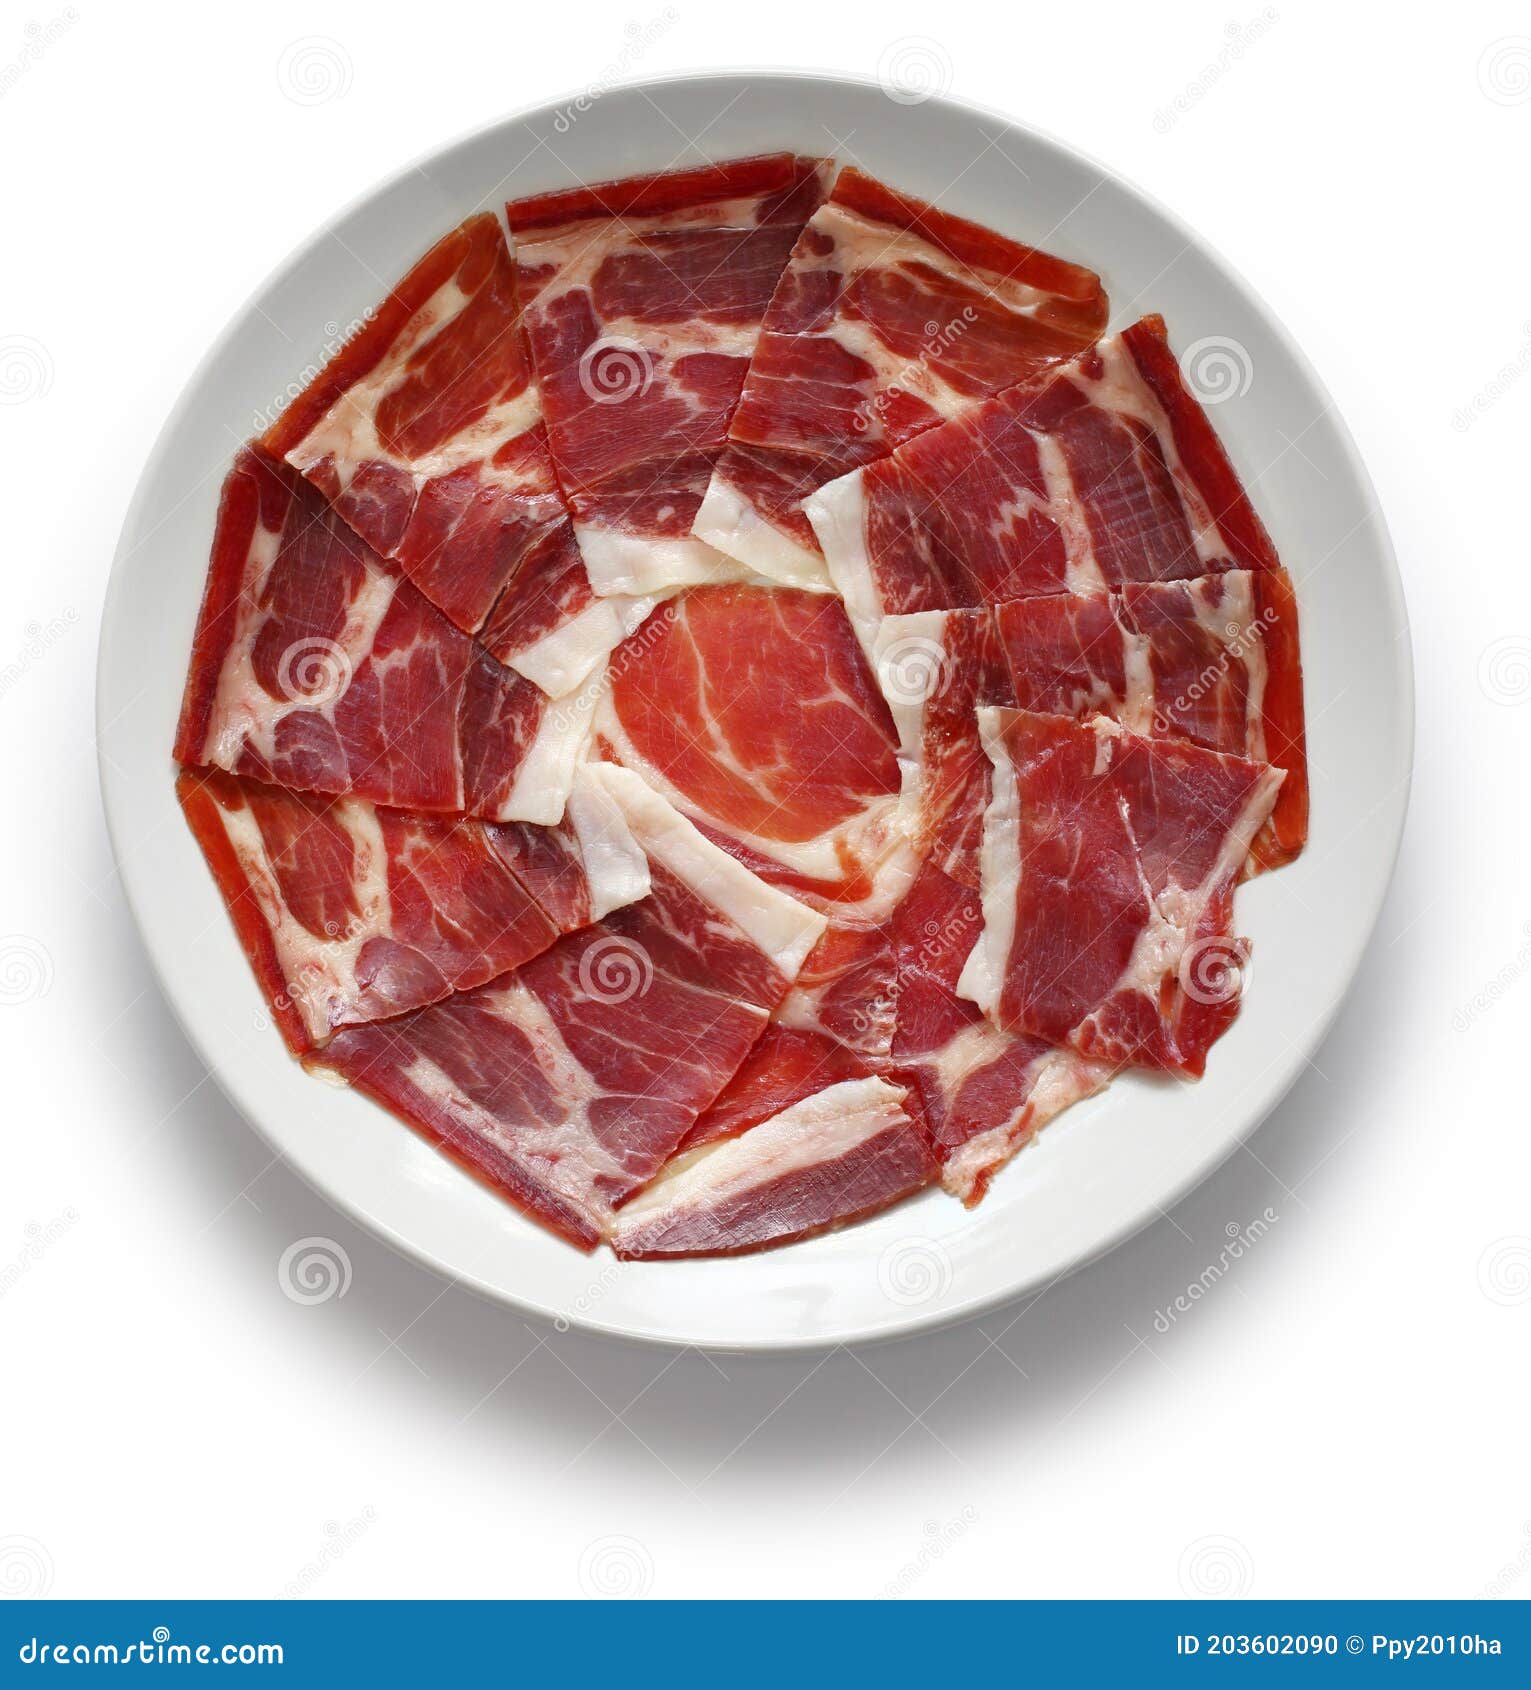 jamon iberico, spanish dry cured ham